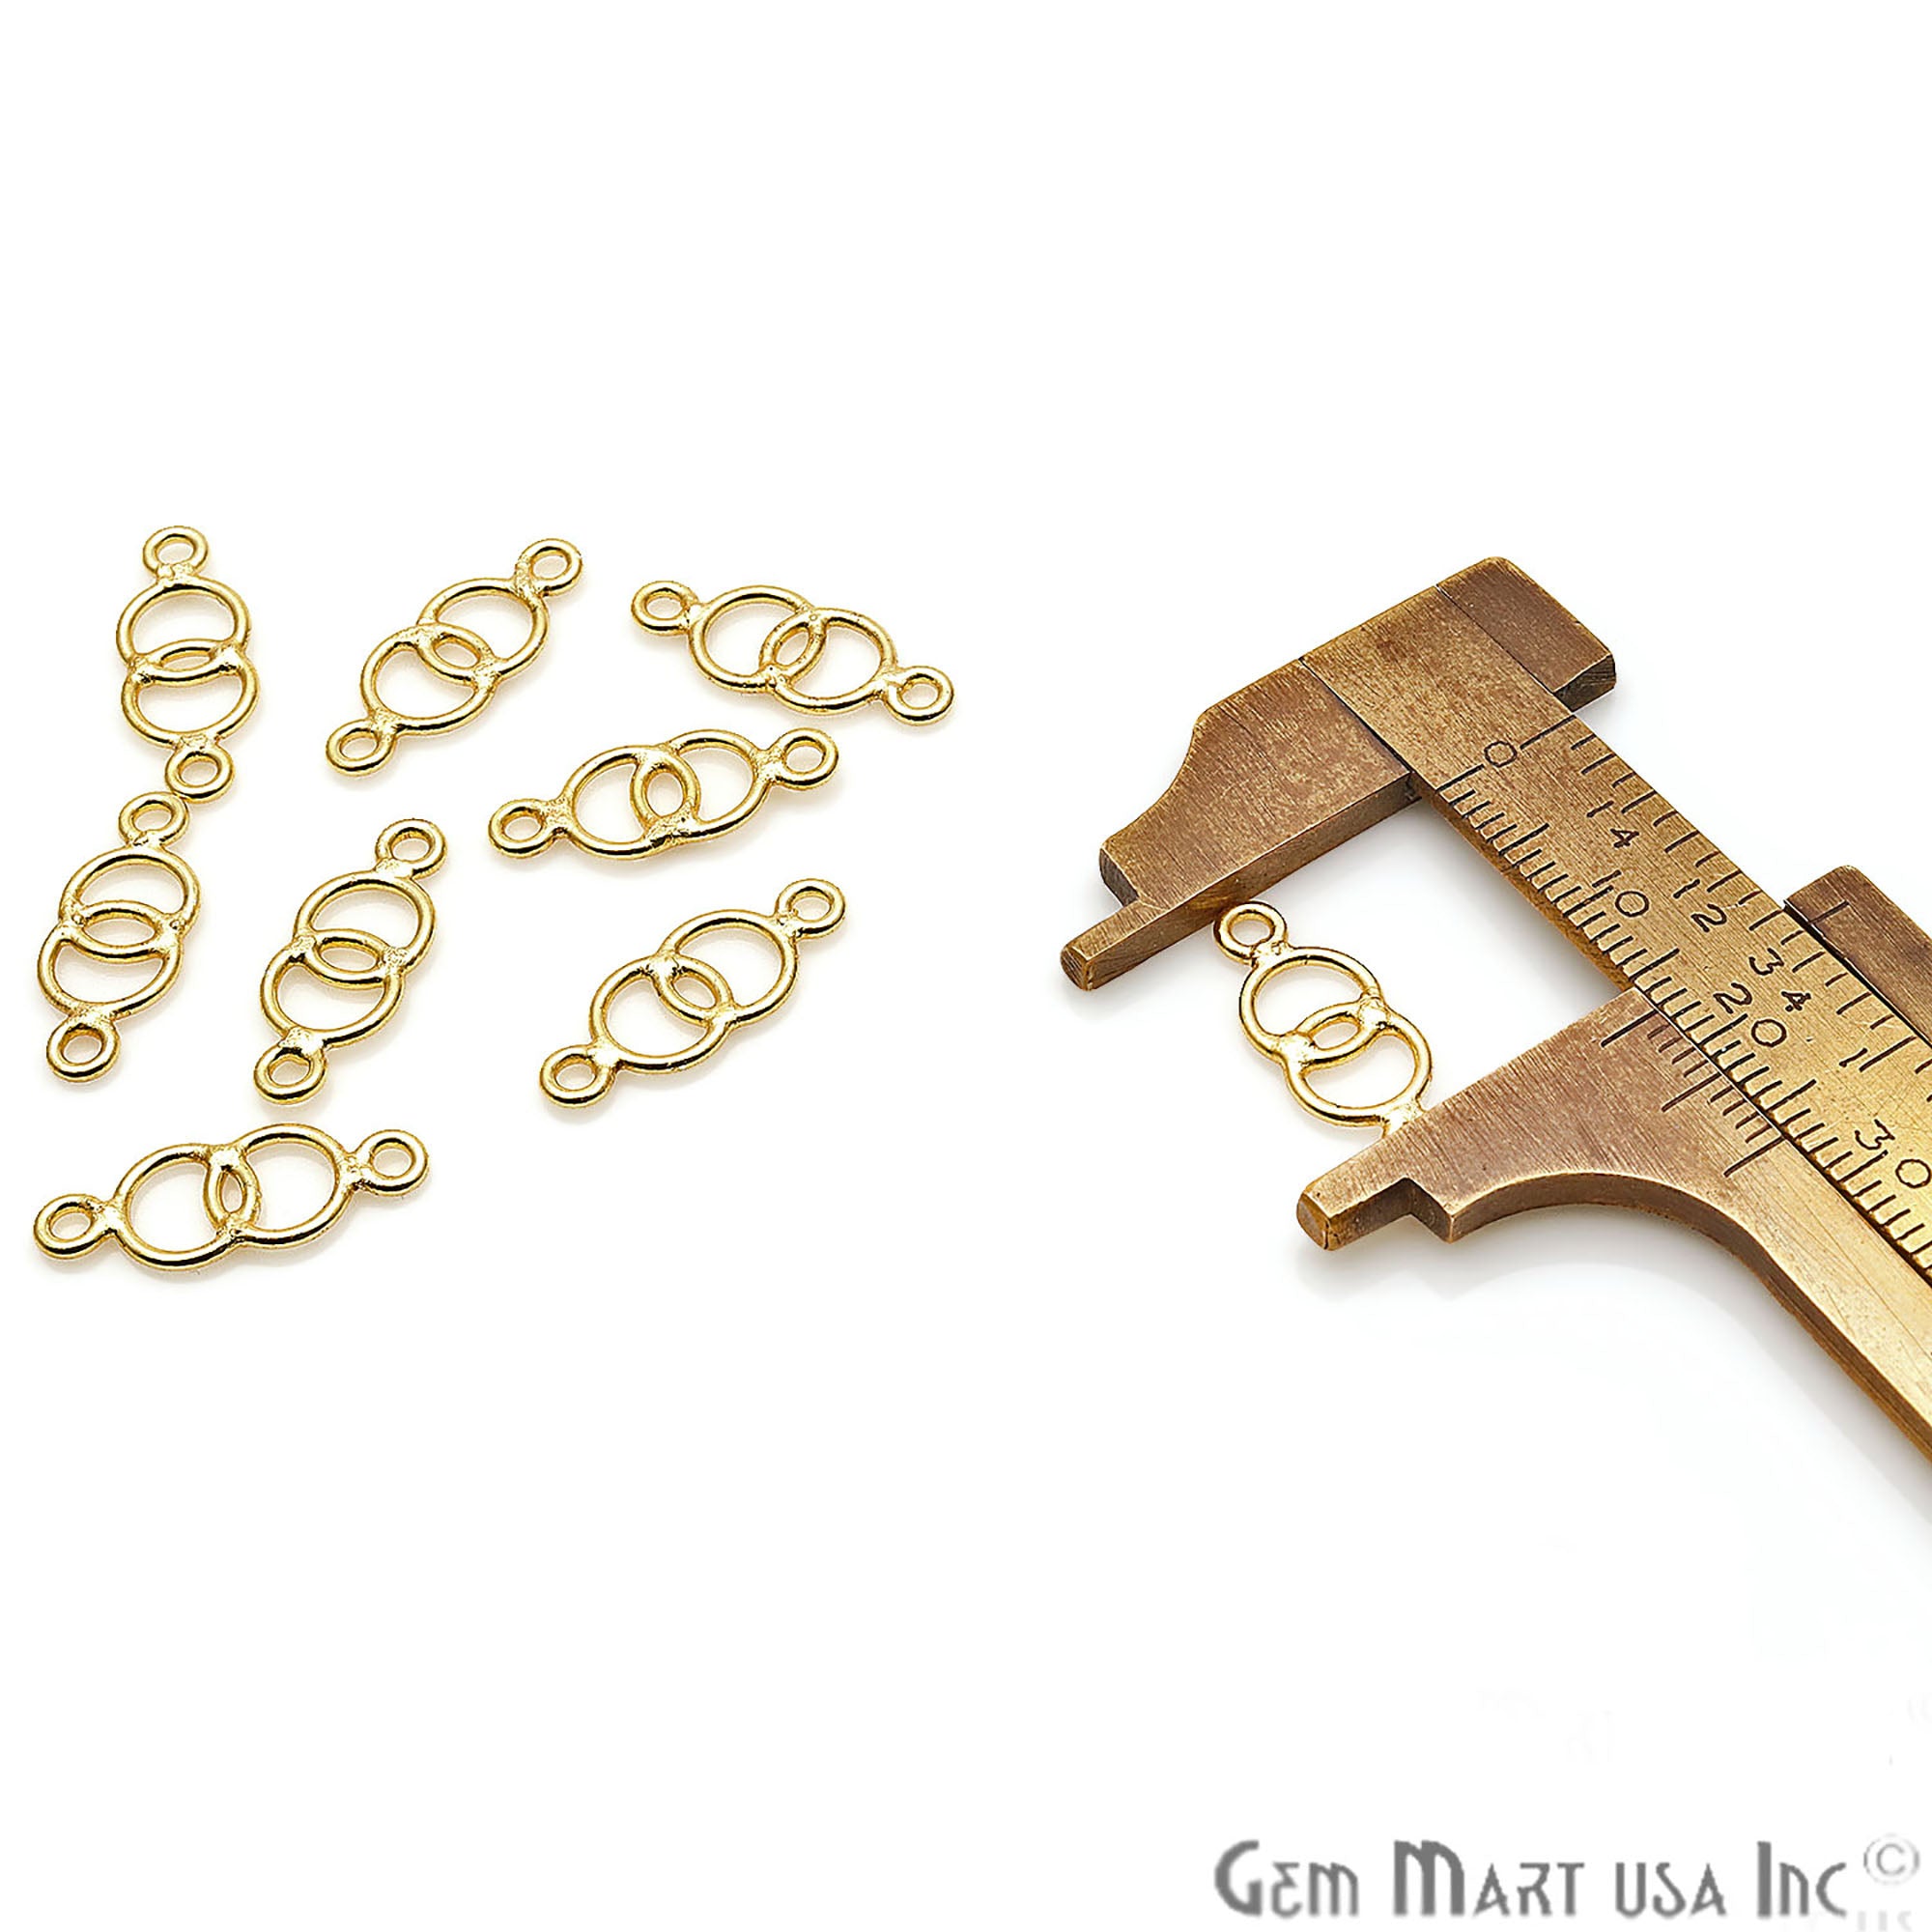 5PC Lot Gold Plated Bracelet Charm Boho Jewelry Finding - GemMartUSA